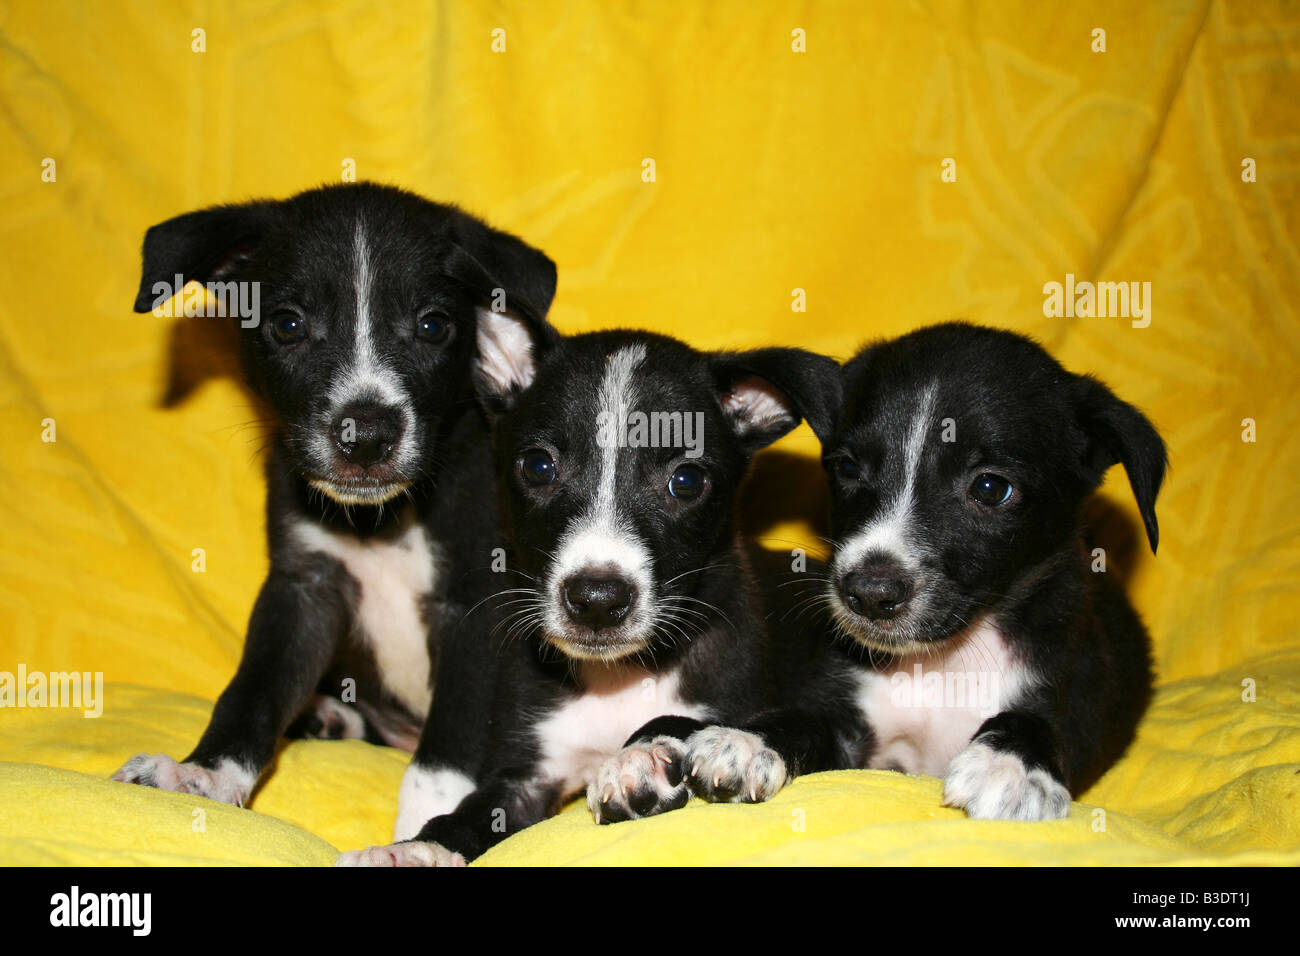 triplet 'potcake' puppies up for adoption. Stock Photo